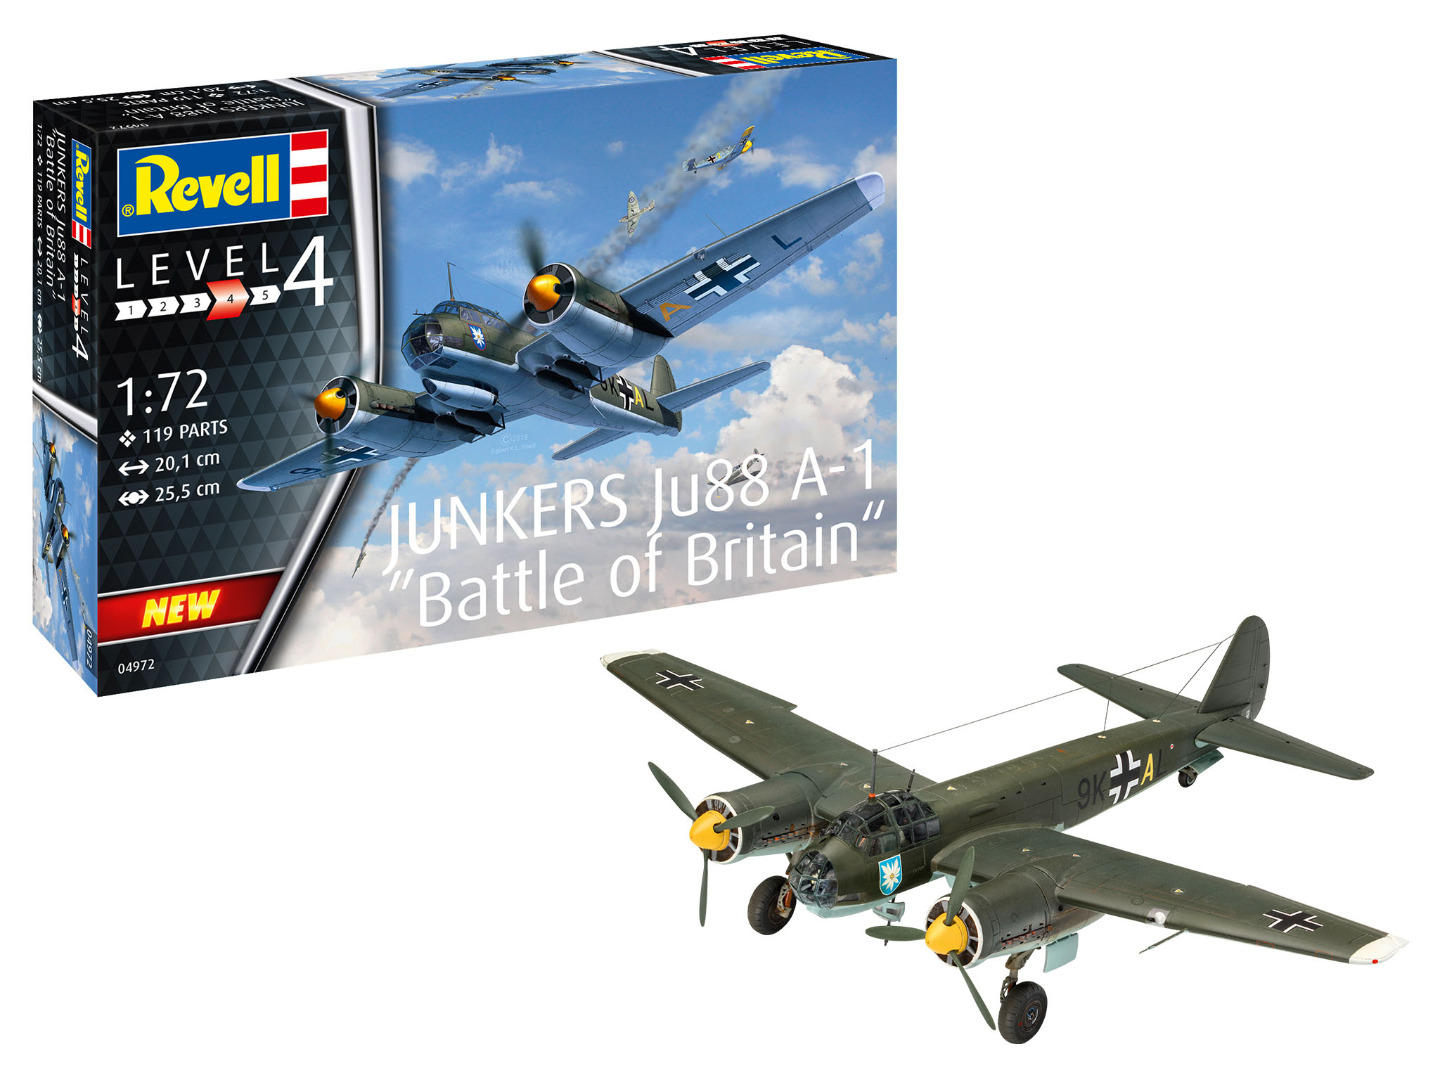 Revell Model Kit Junkers Ju 88 A-1 Battle of Britain Scale 1:72